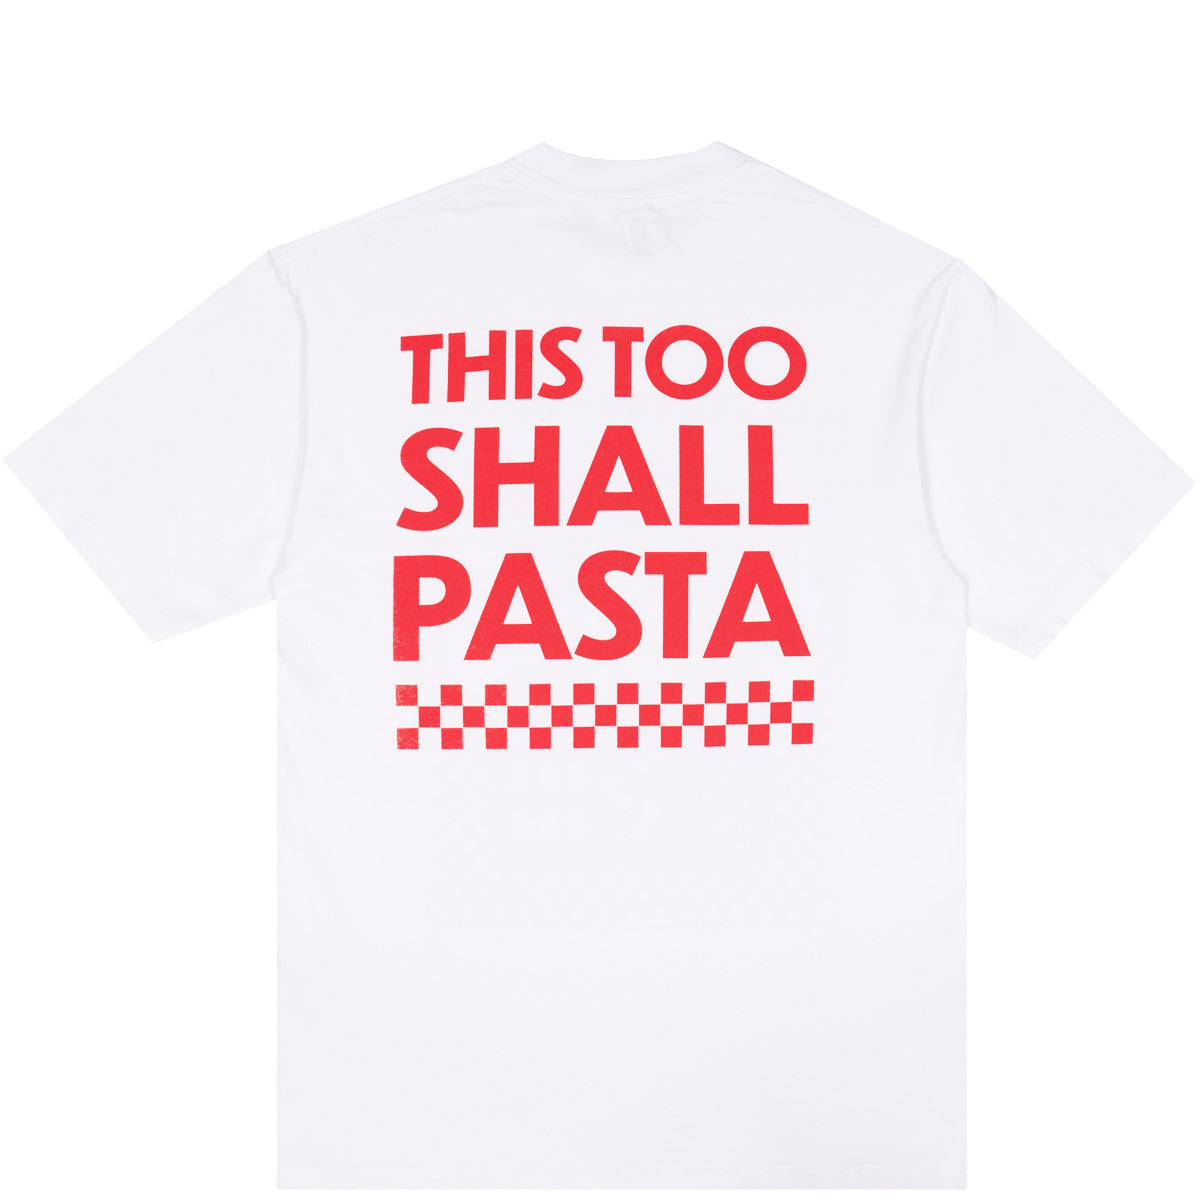 This Too Shall Pasta T-Shirt